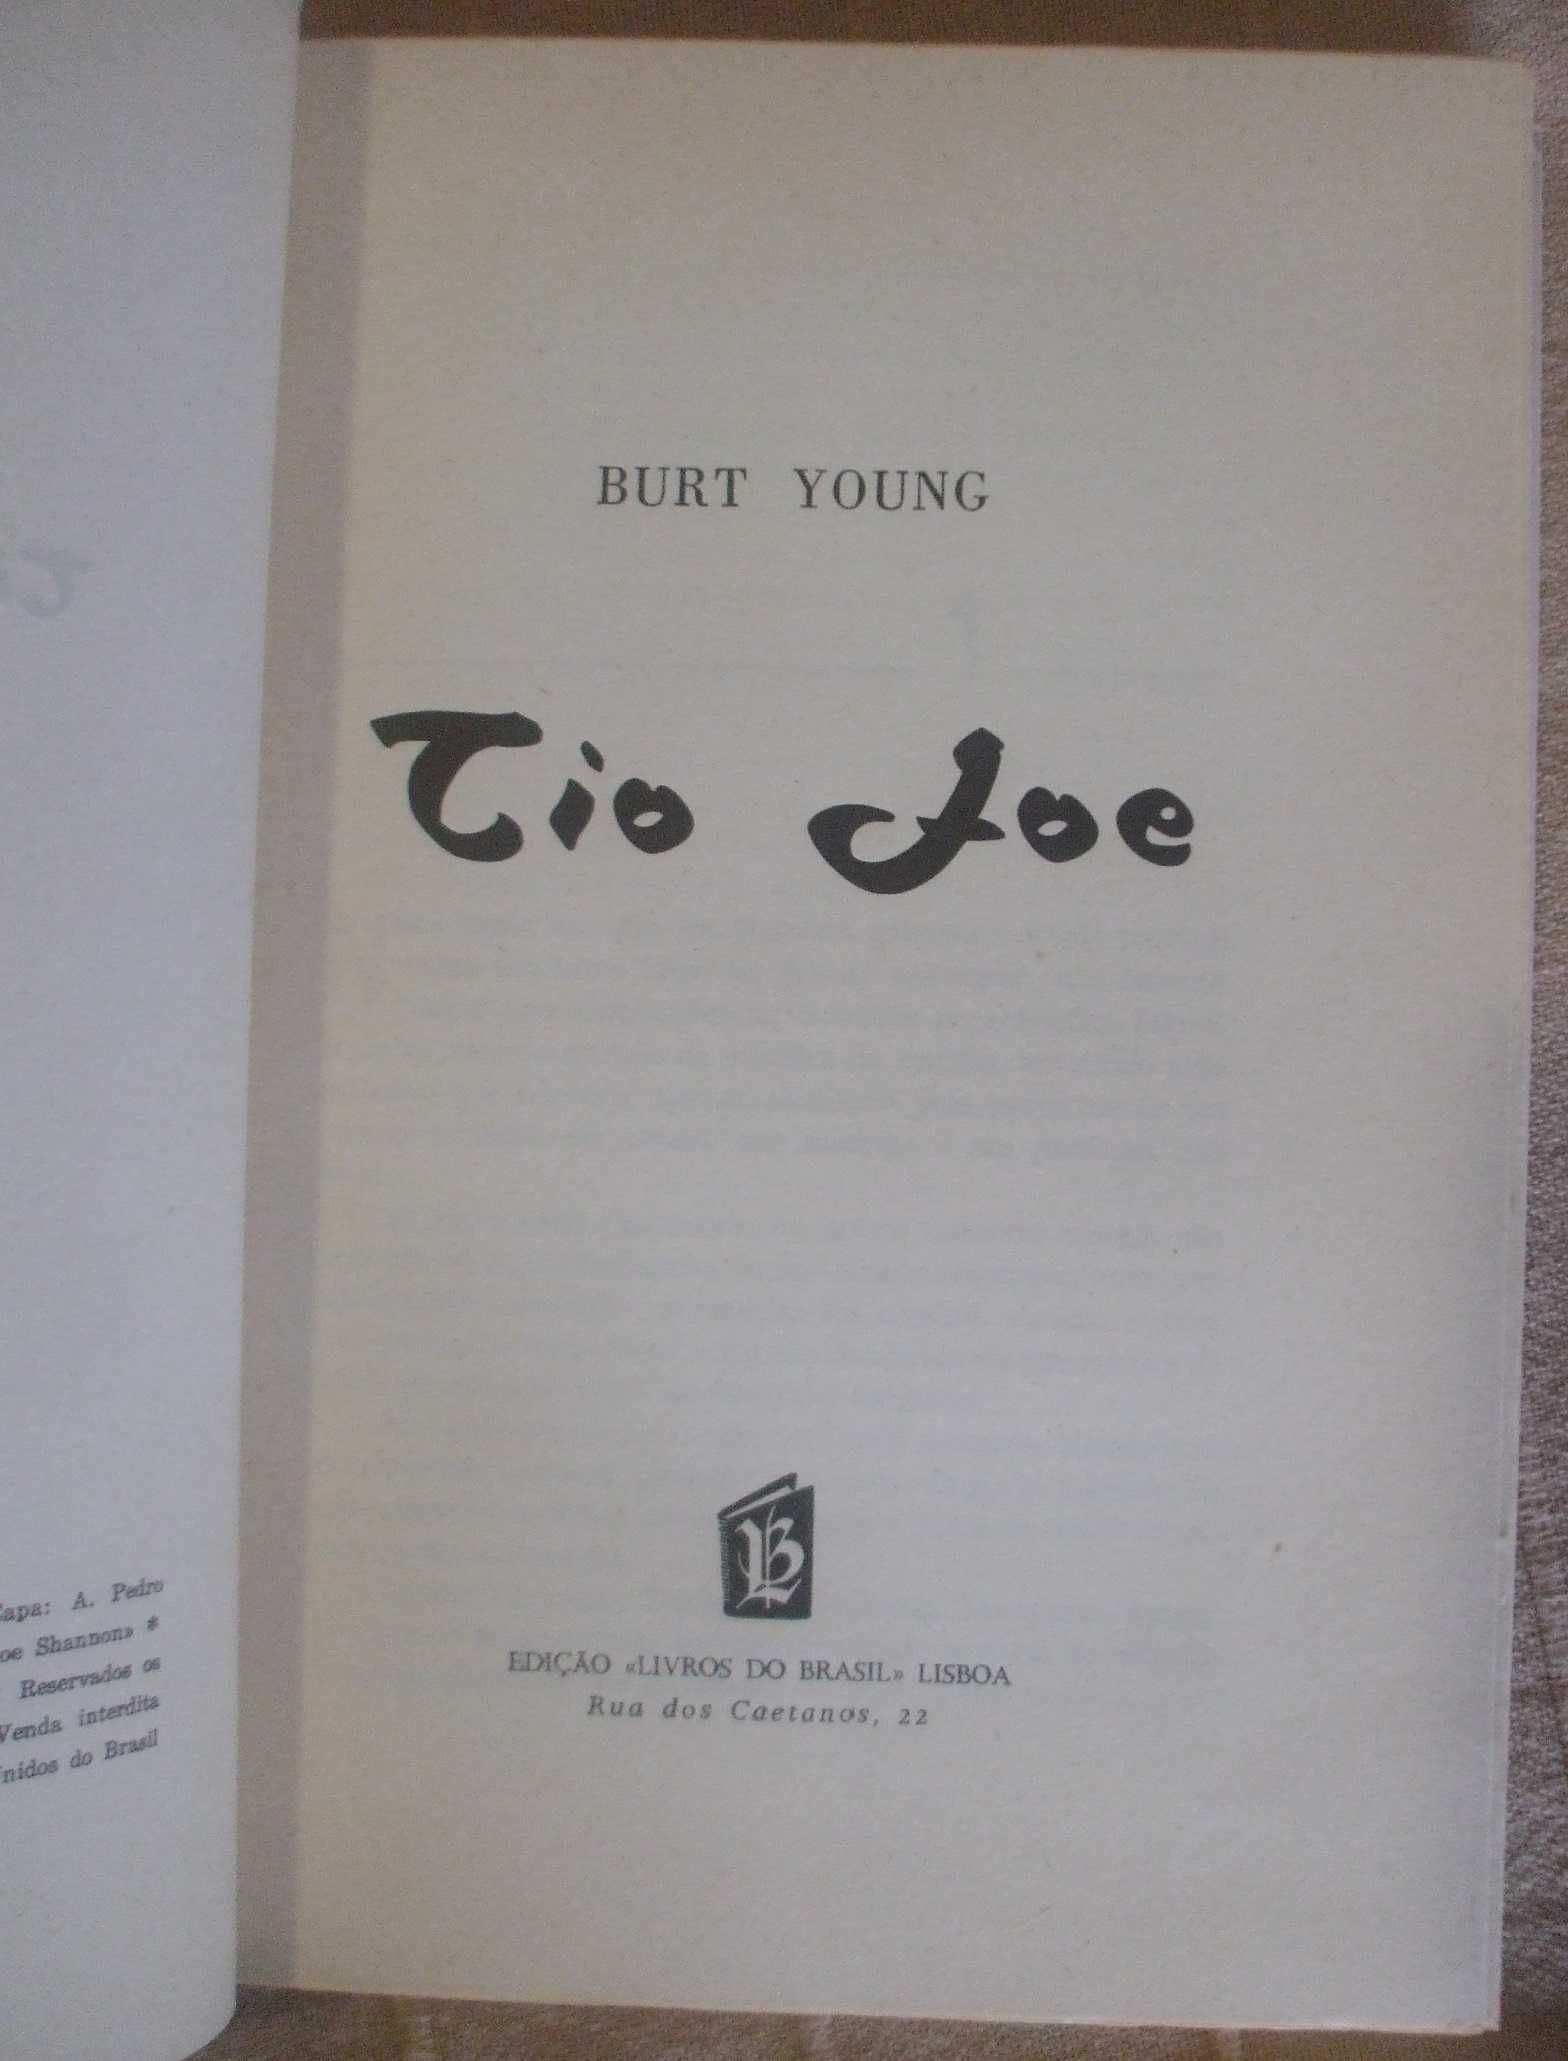 Tio Joe, Burt Young